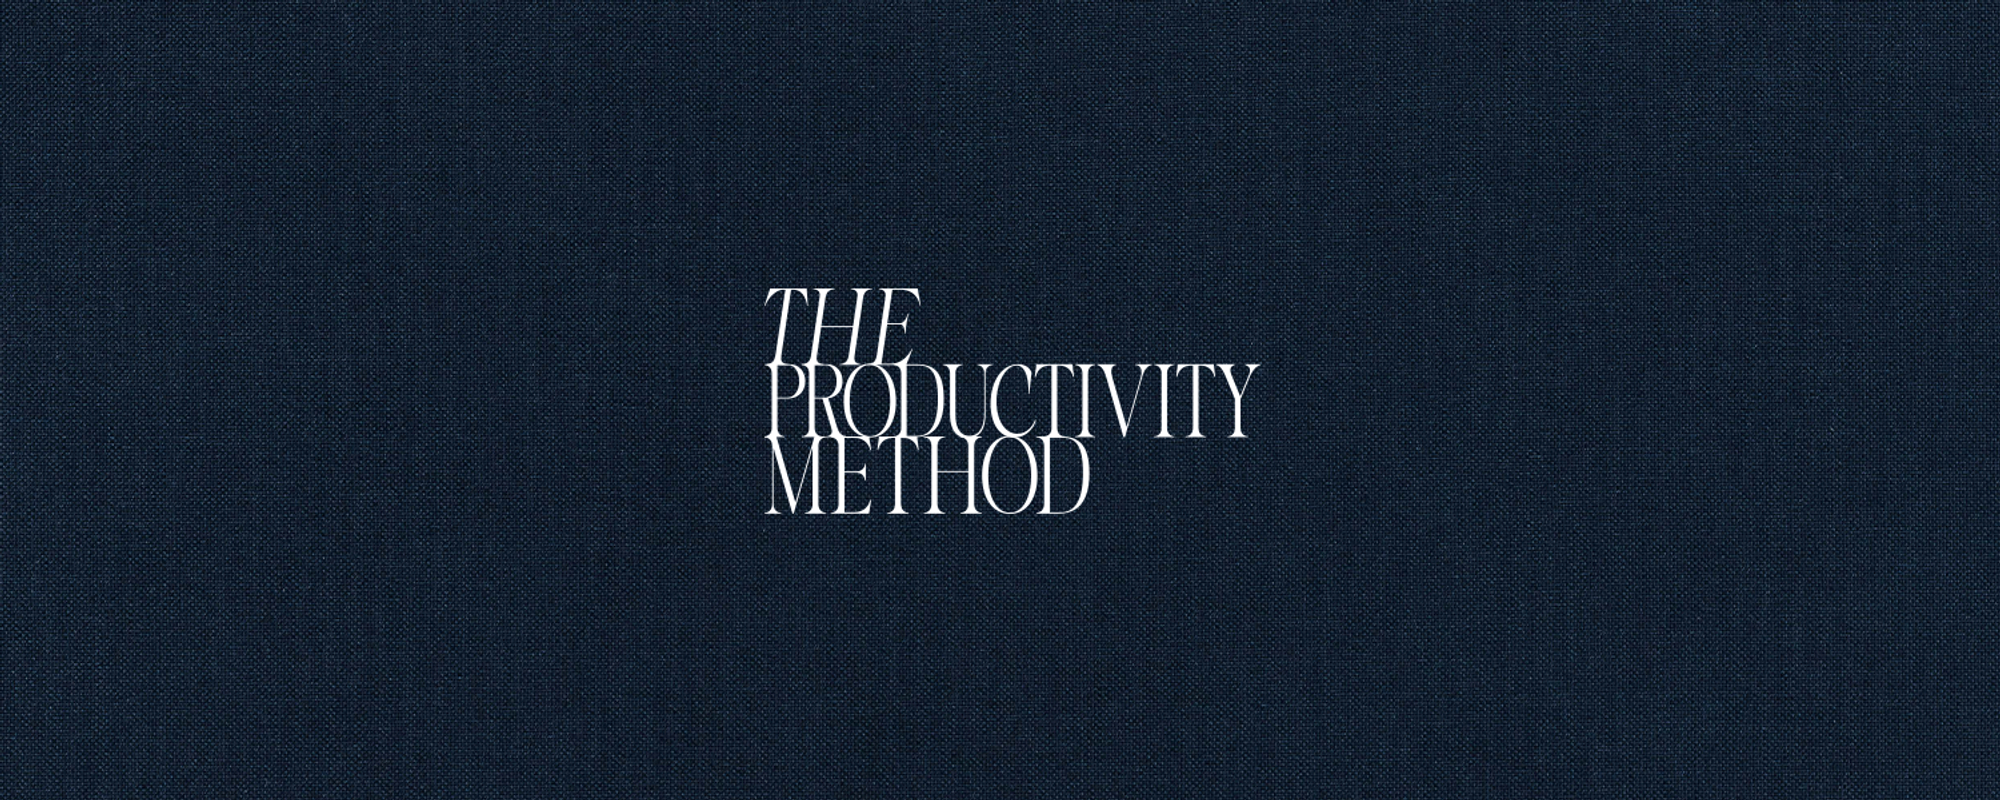 the-productivity-method.notion.site